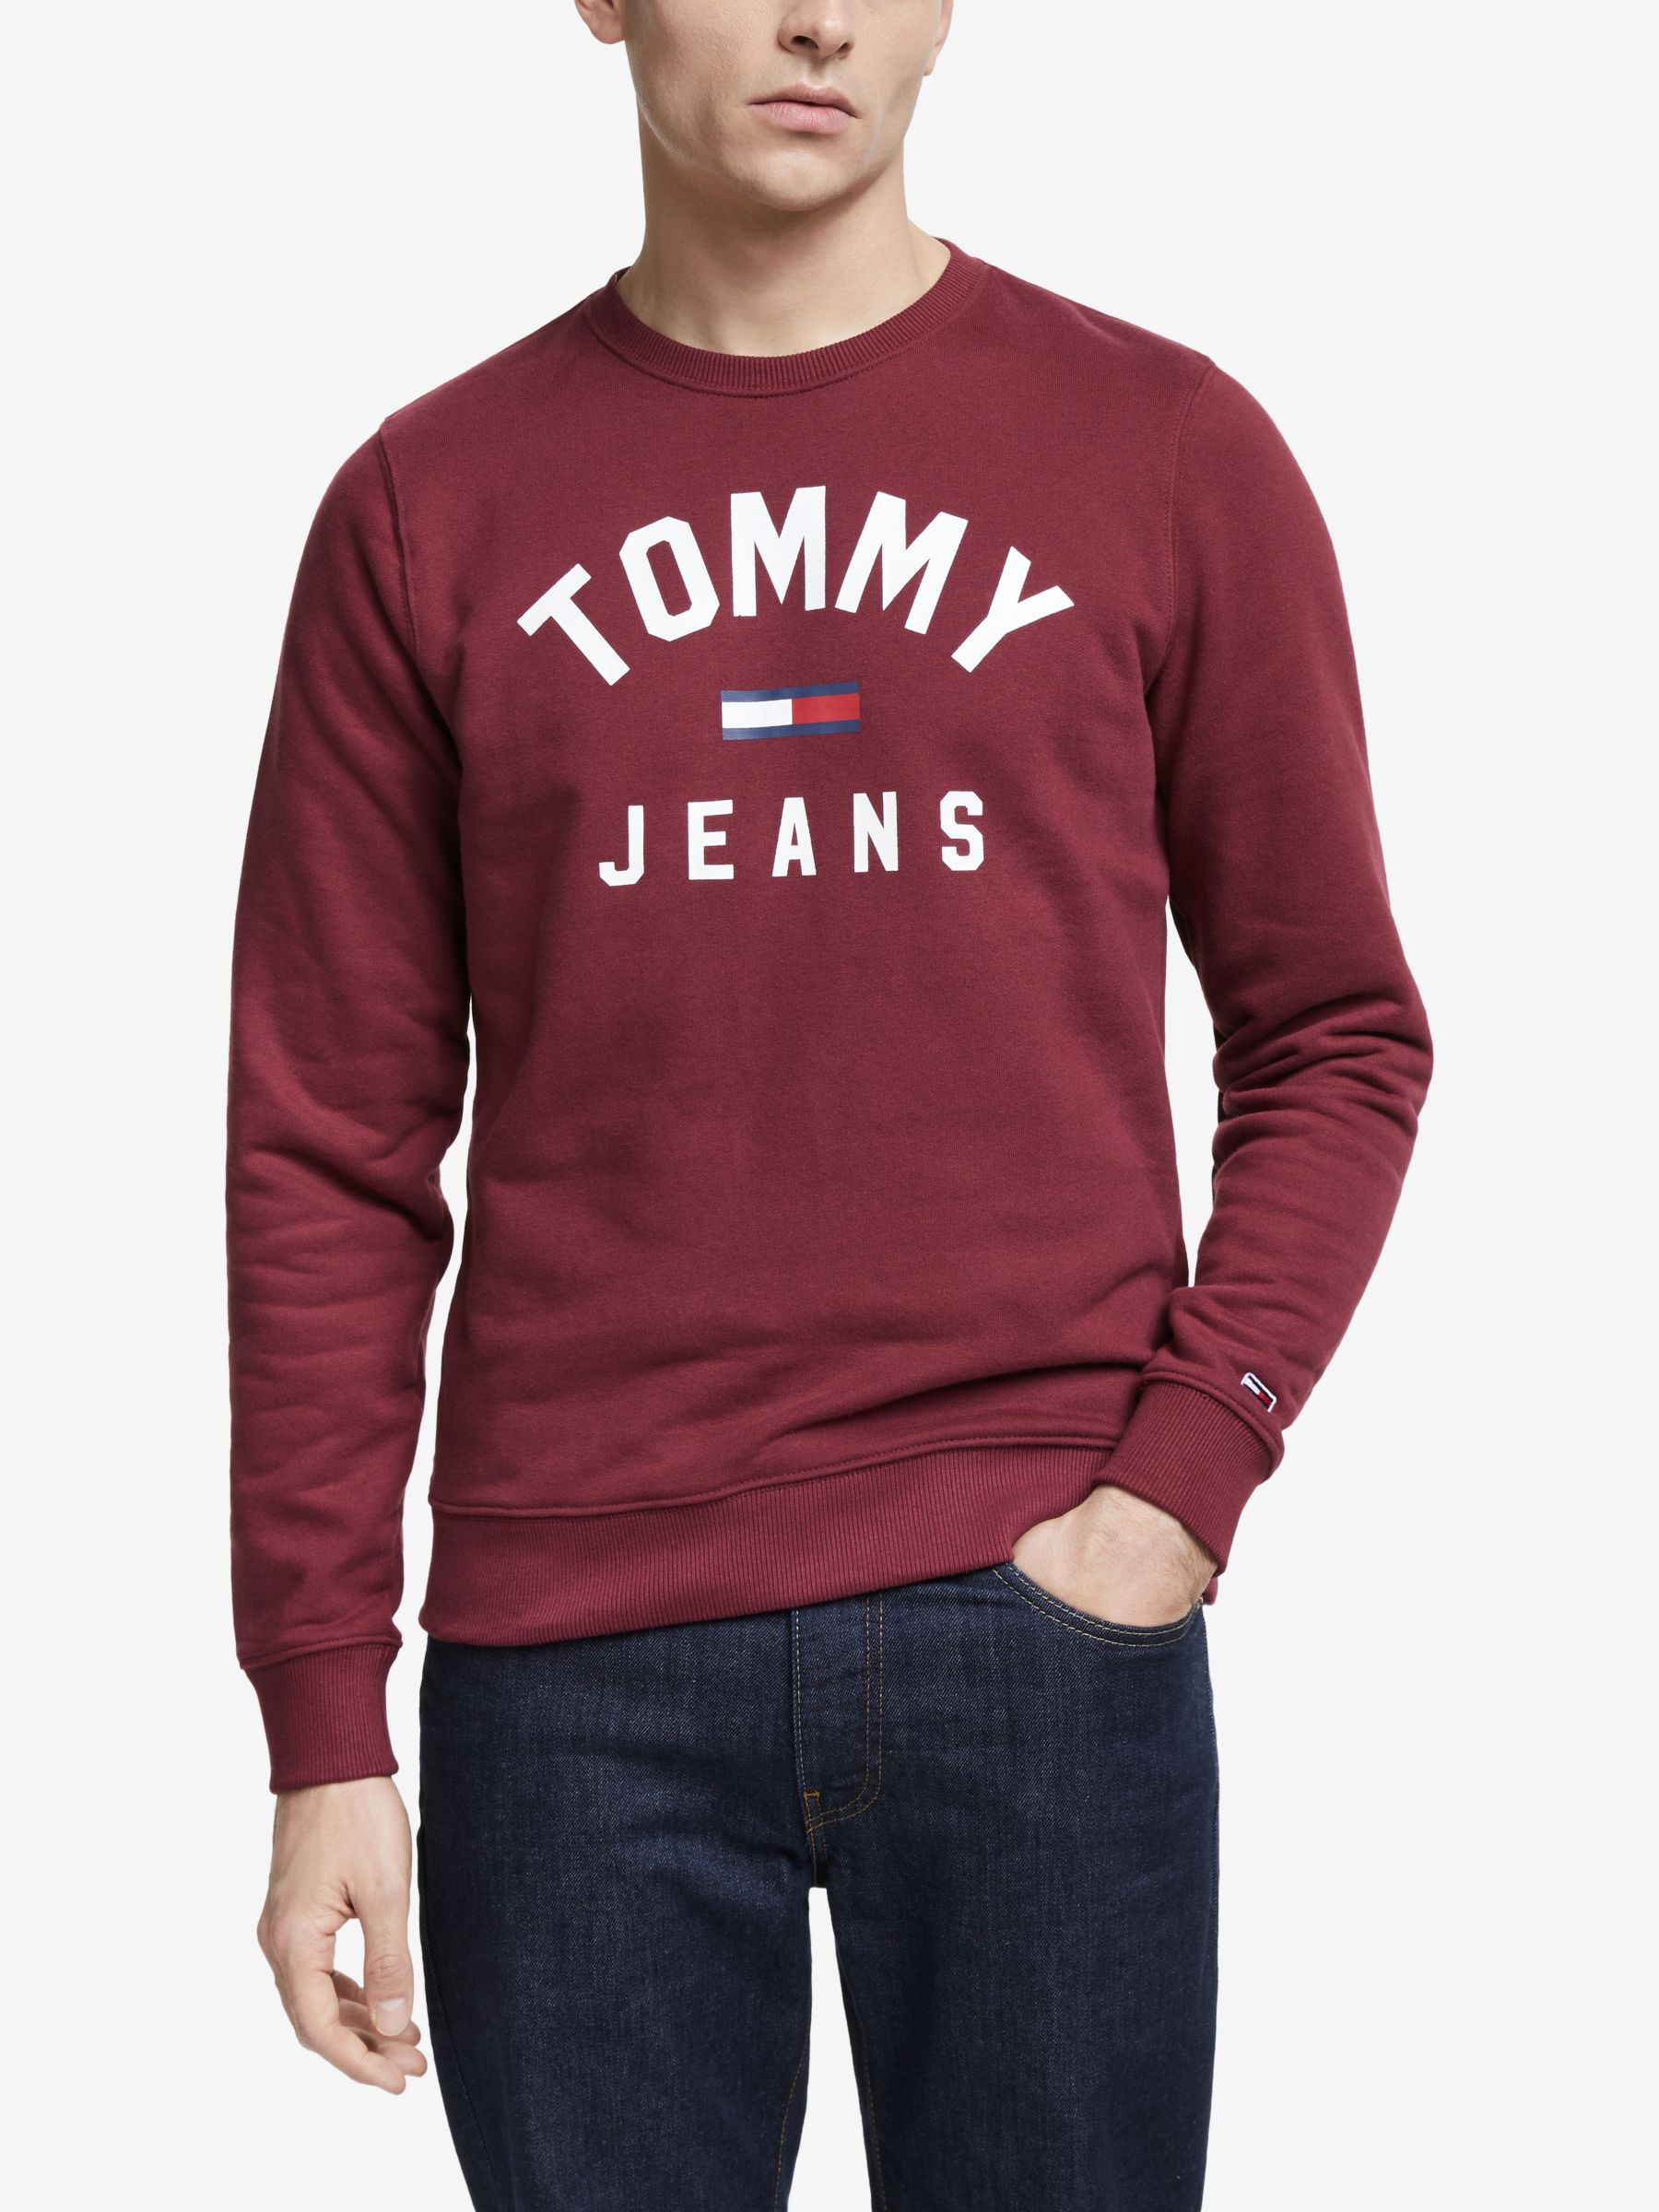 tommy jeans sweatshirt burgundy